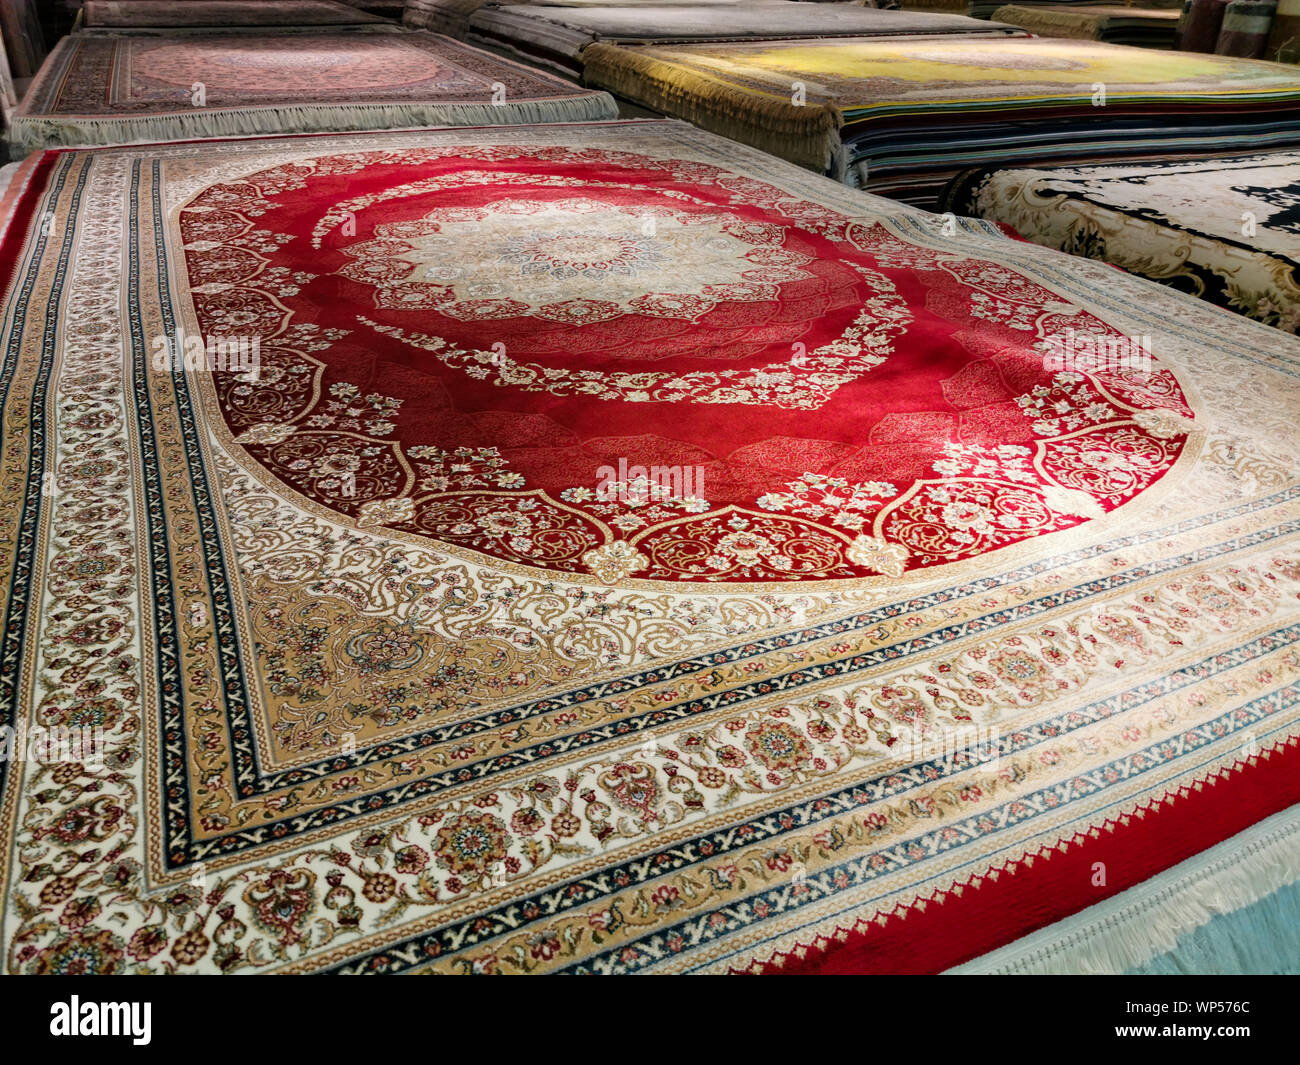 Variopinti tappeti persiani o tappeti e tappetini a visualizzare ina shop  Foto stock - Alamy